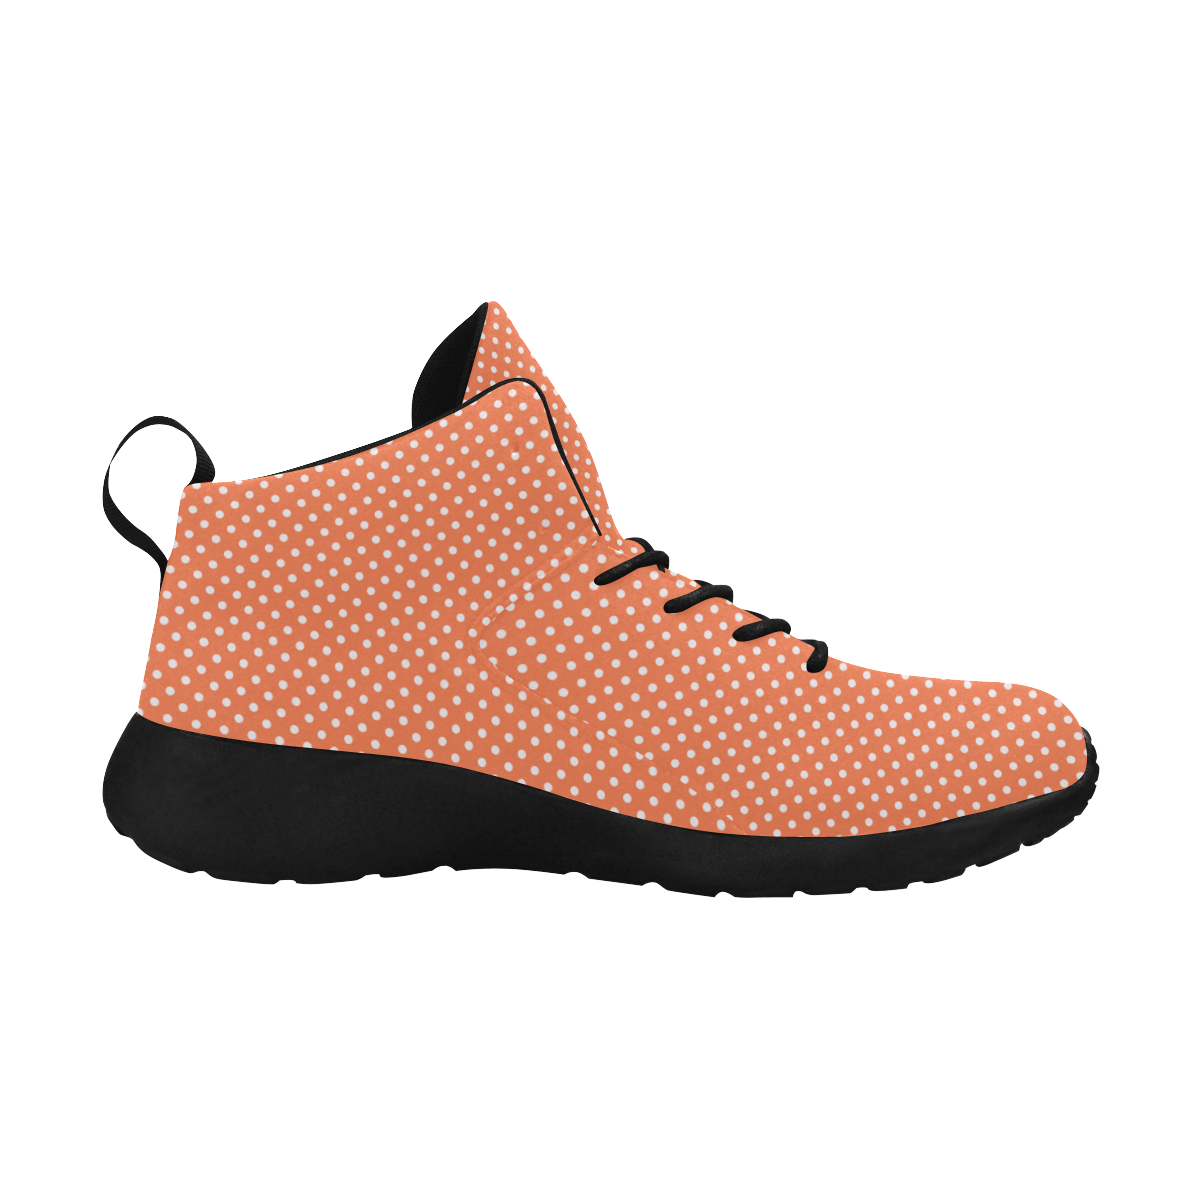 Appricot polka dots Women's Chukka Training Shoes (Model 57502)